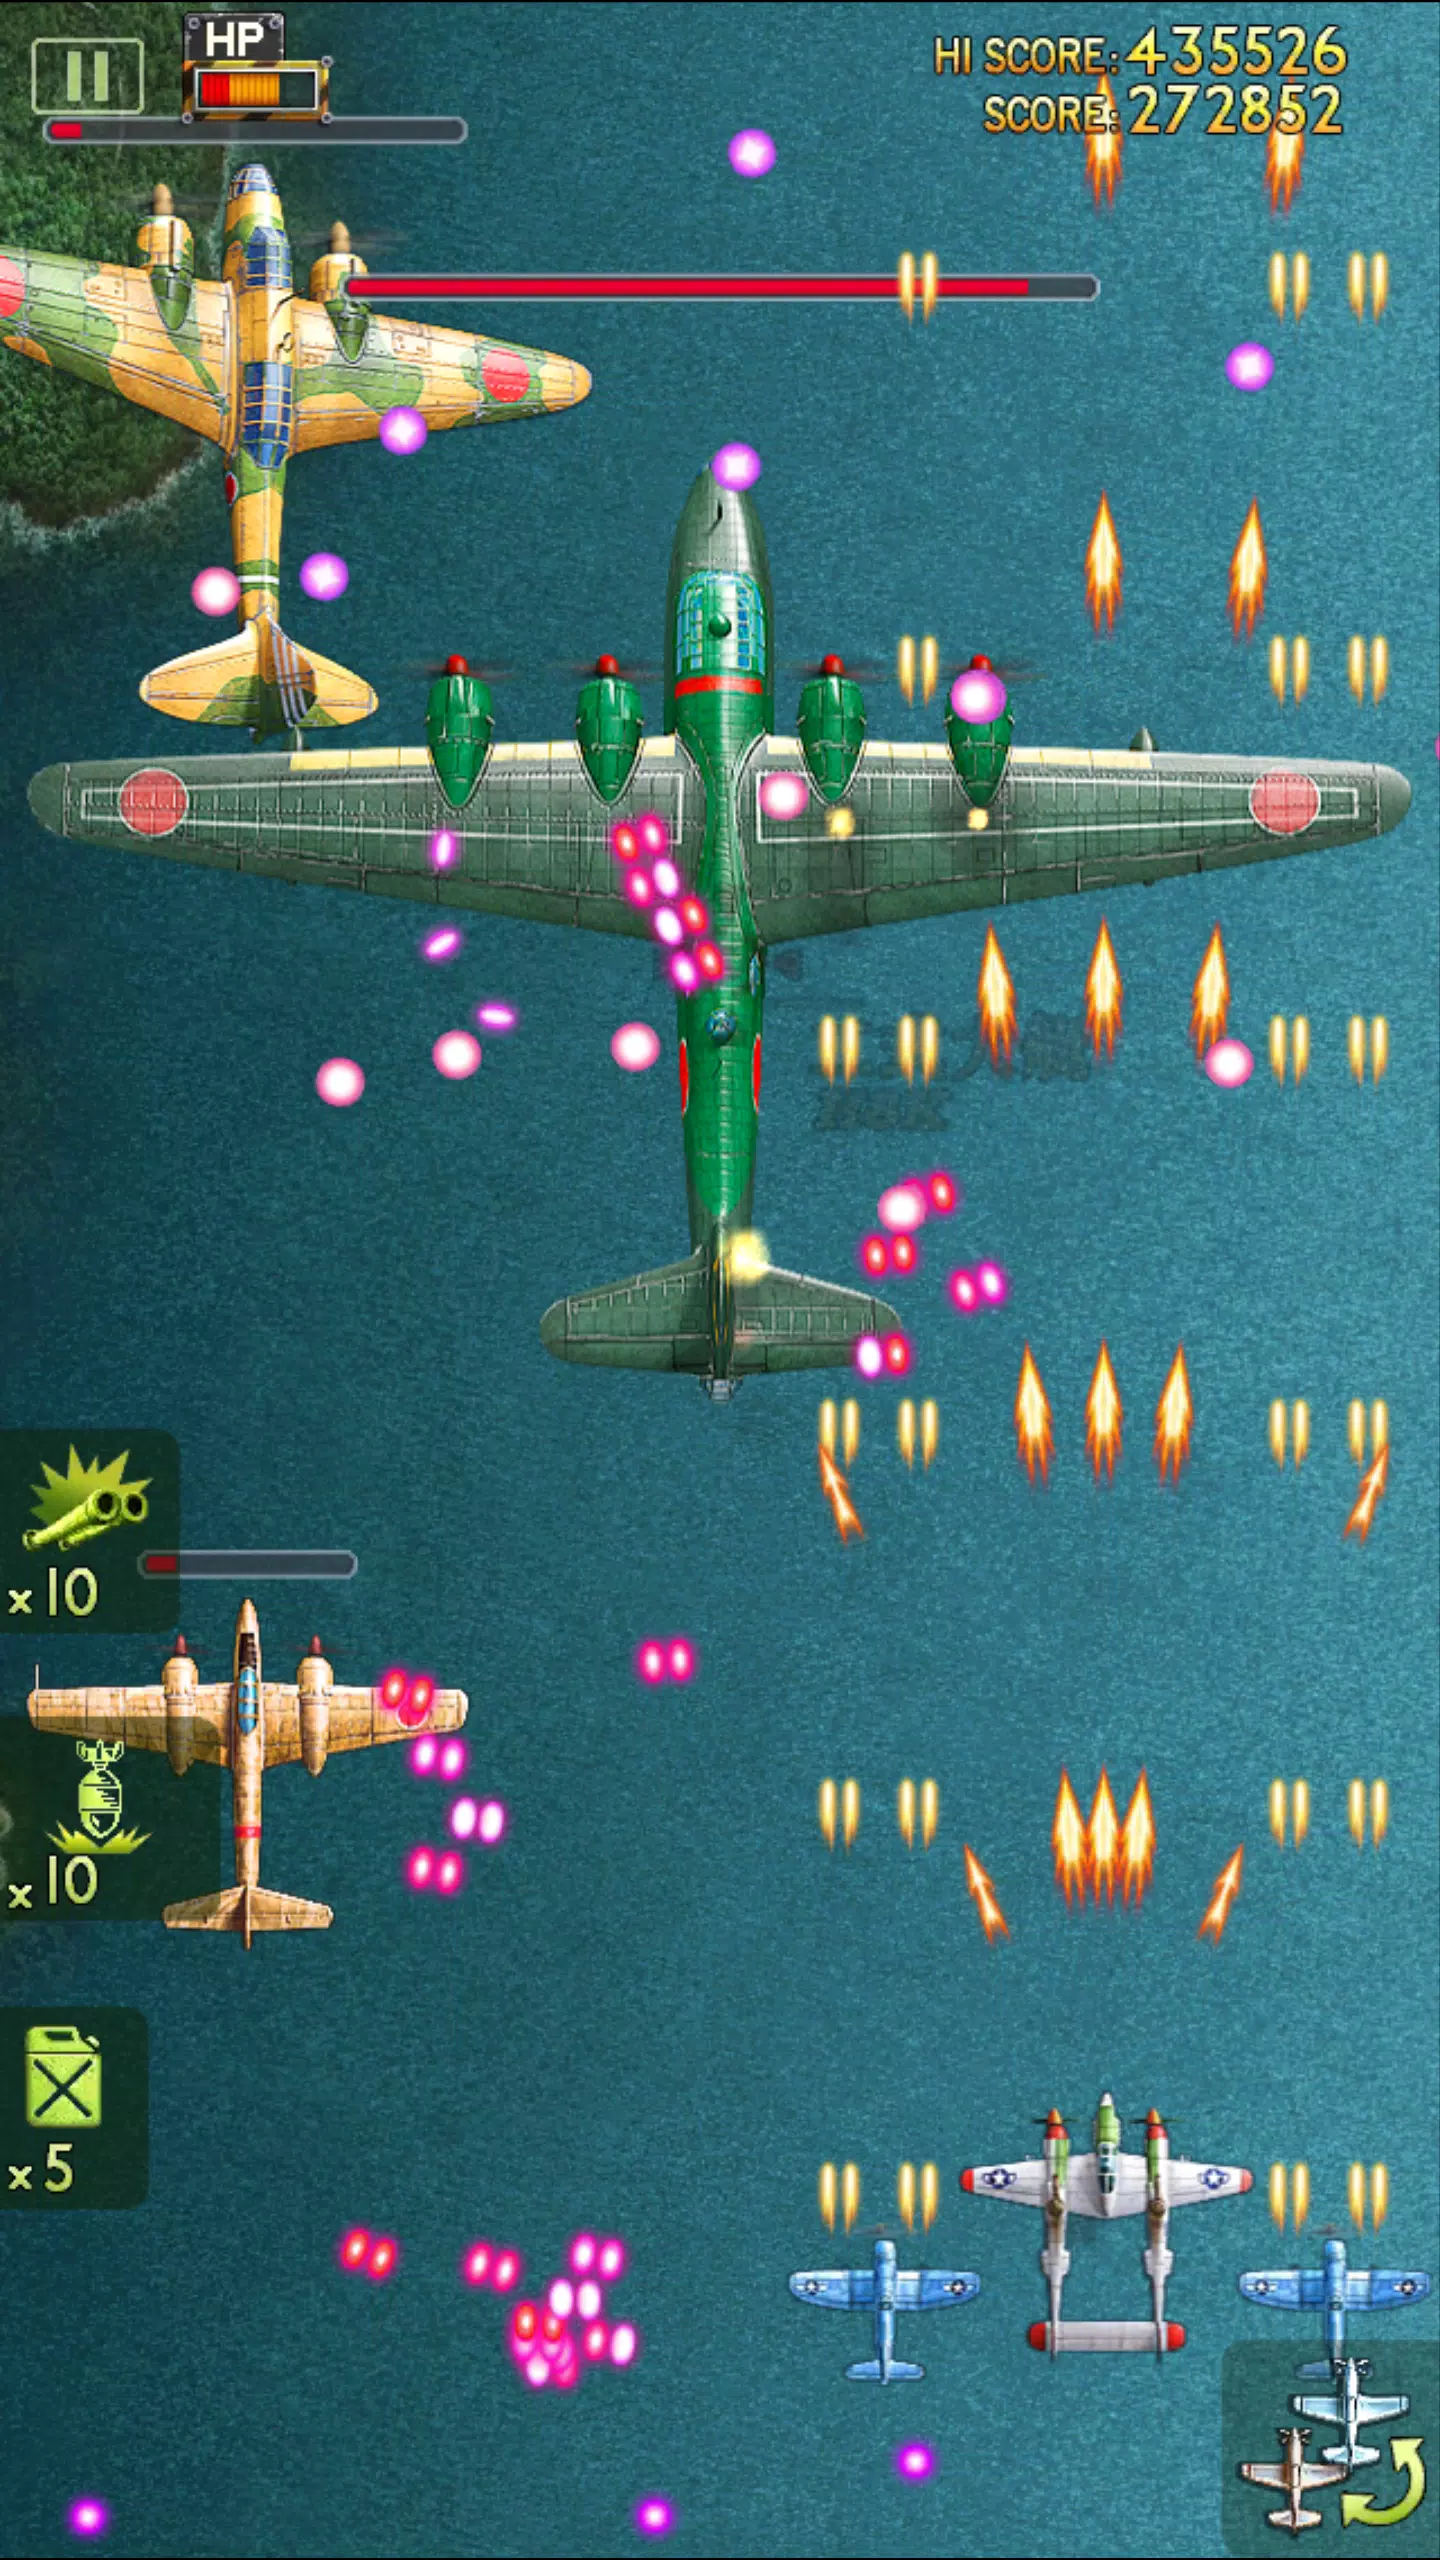 Jogos para Android e iOS Grátis - iFighter 2: The Pacific 1942